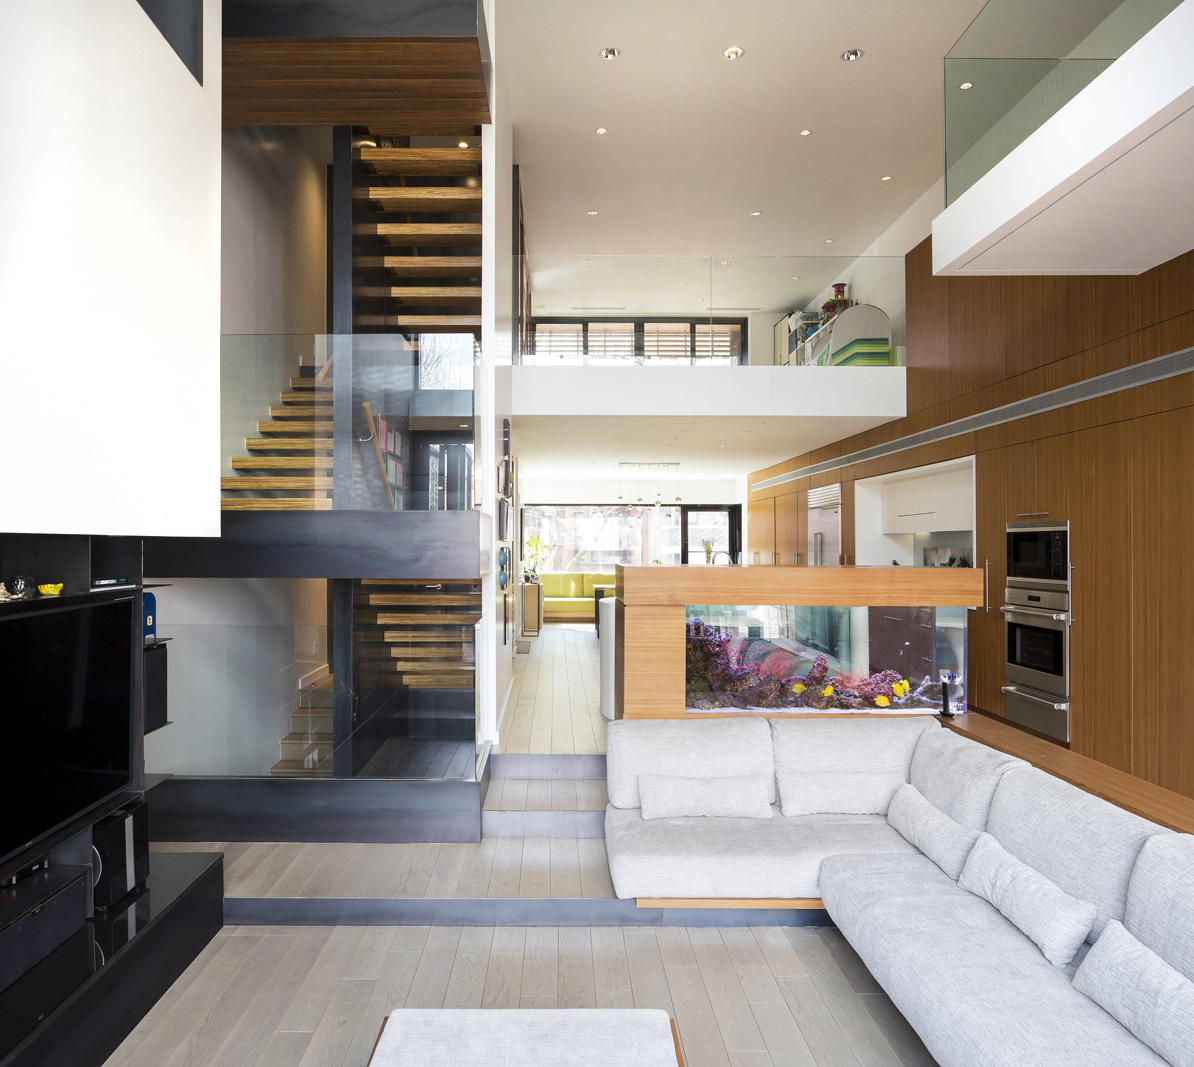 res4-resoltuion-4-architecture-modern-brownstone-home-renovation-interior-living.jpg